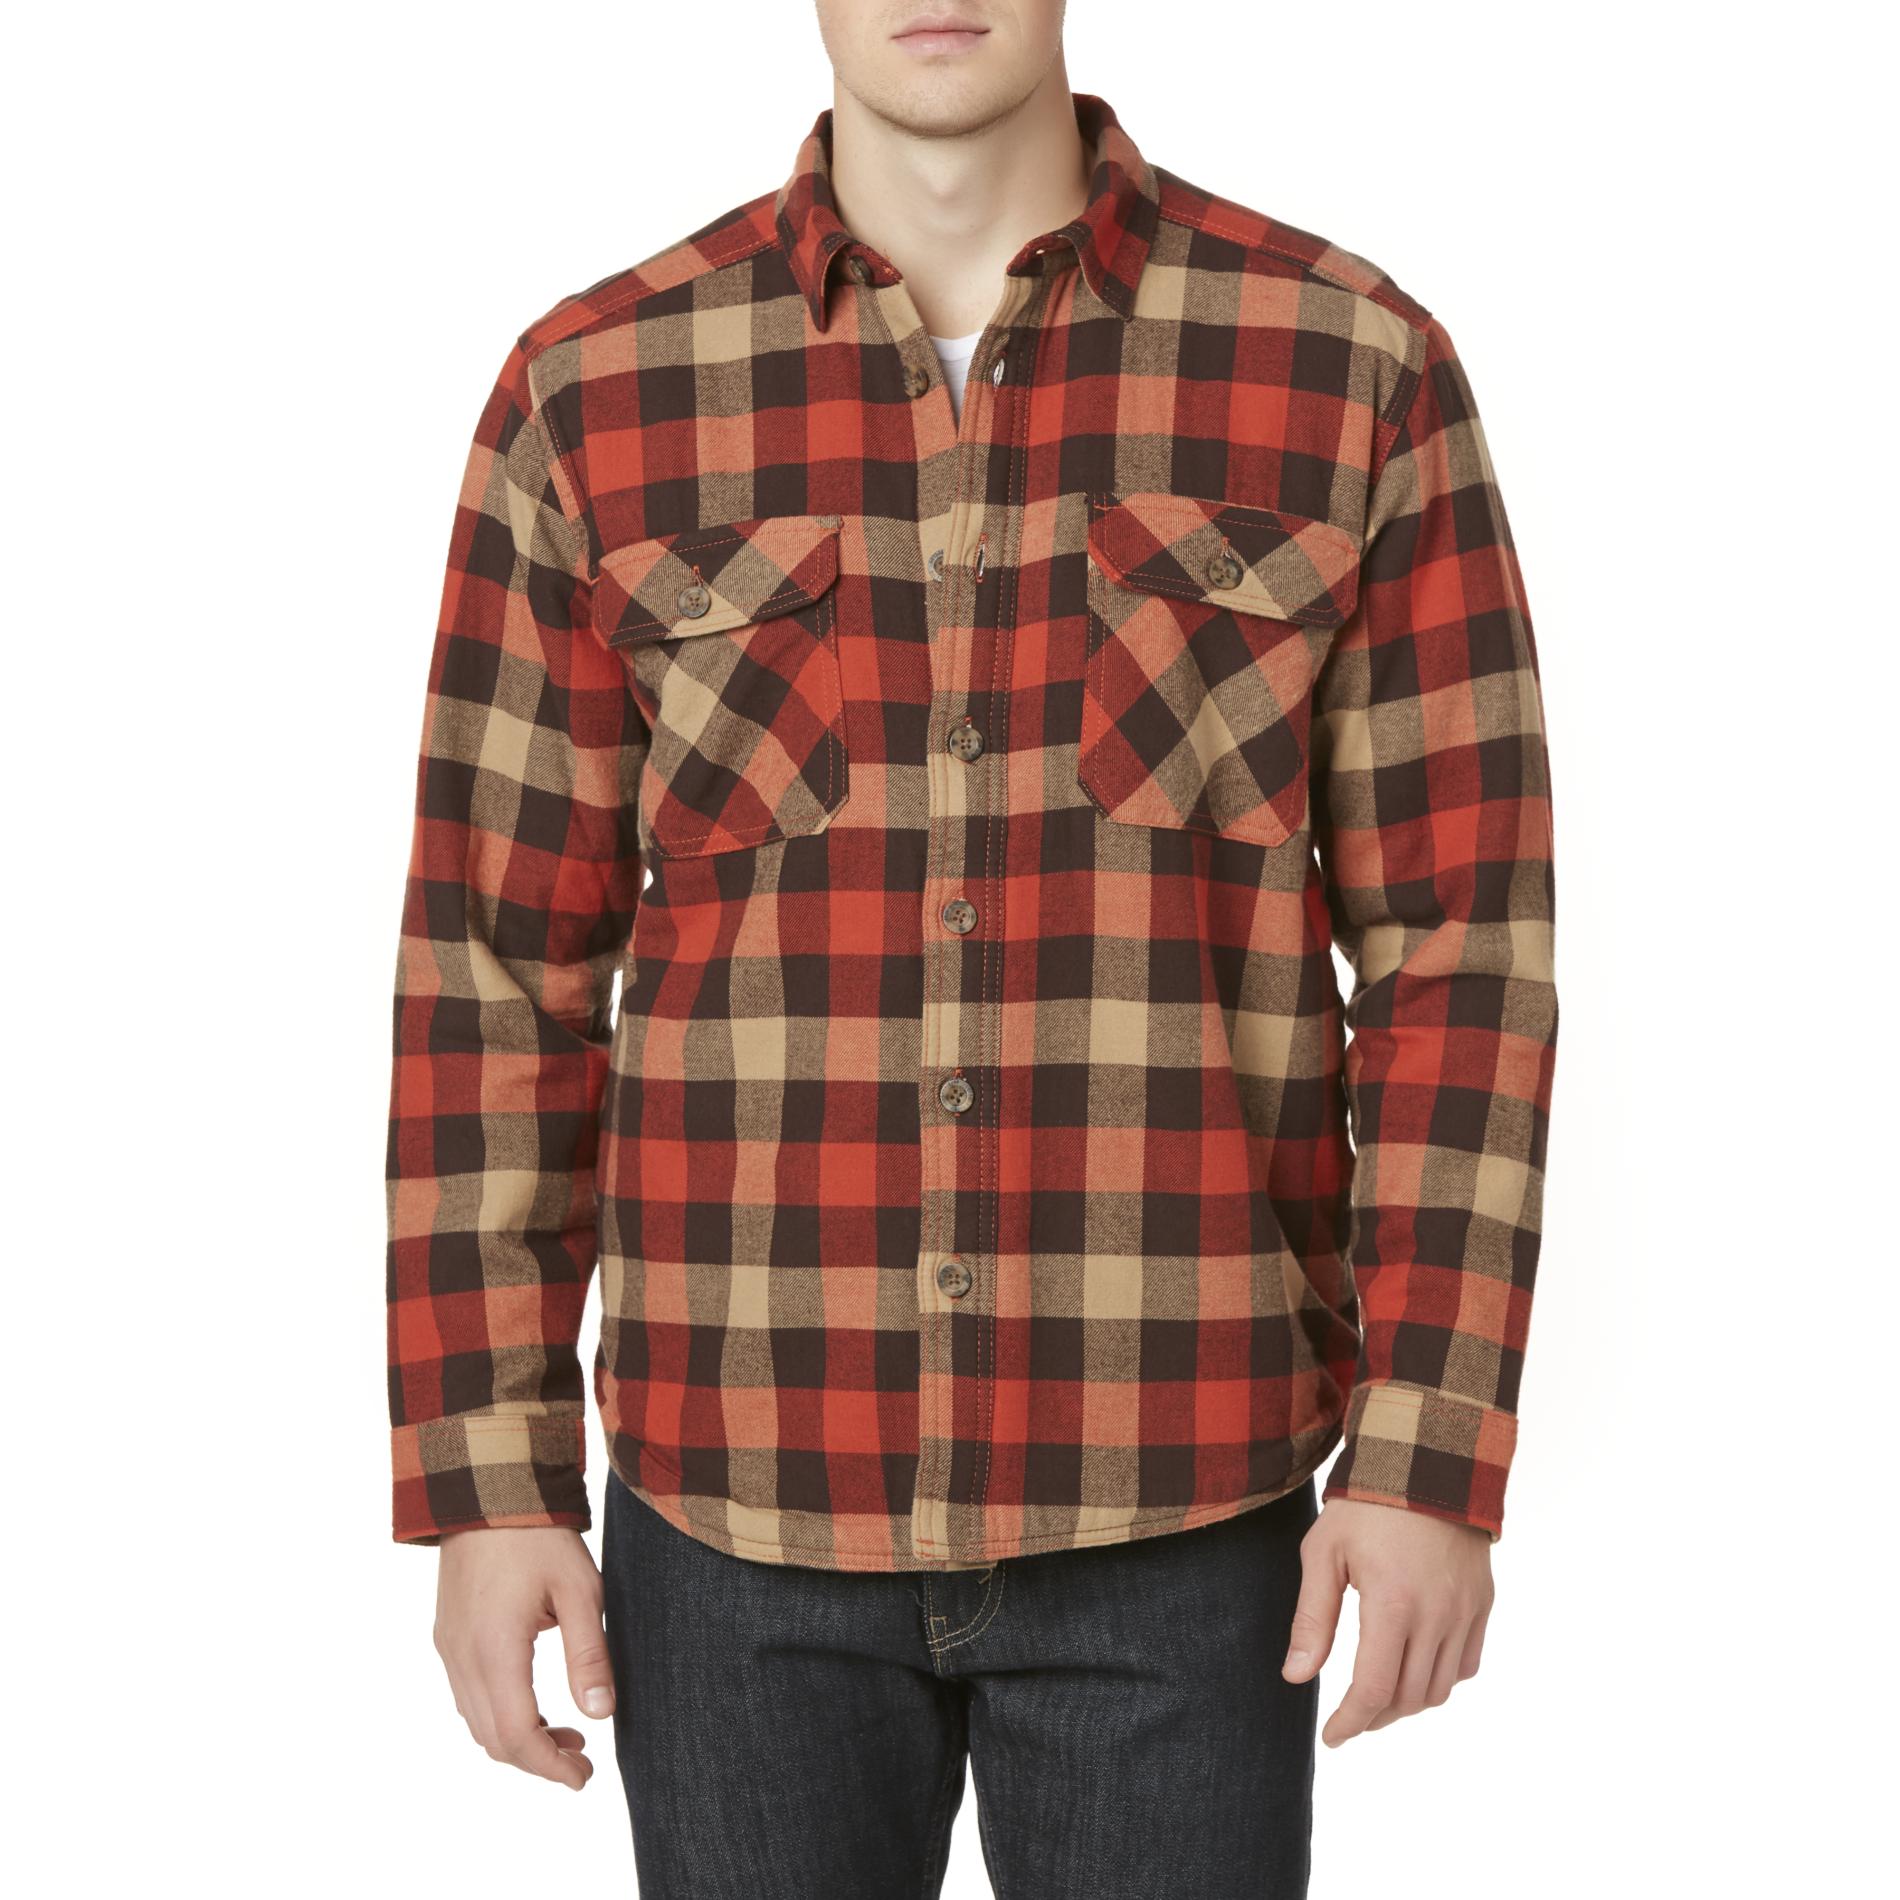 Outdoor Life Men's Flannel Shirt Jacket - Plaid | Shop Your Way: Online ...